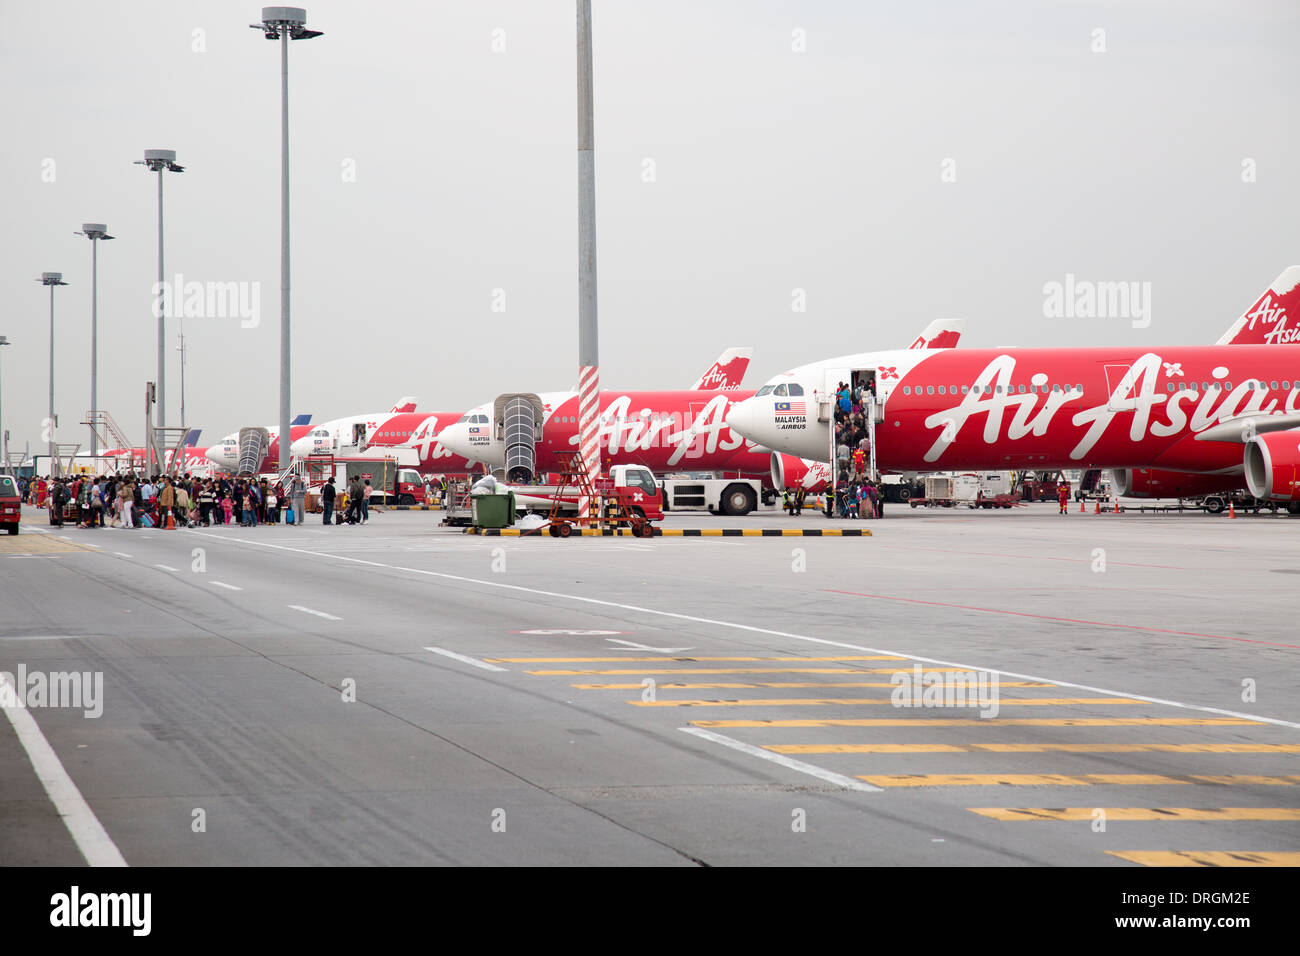 Air Asia airplanes on the runway at Kuala Lumpur Airport Stock Photo